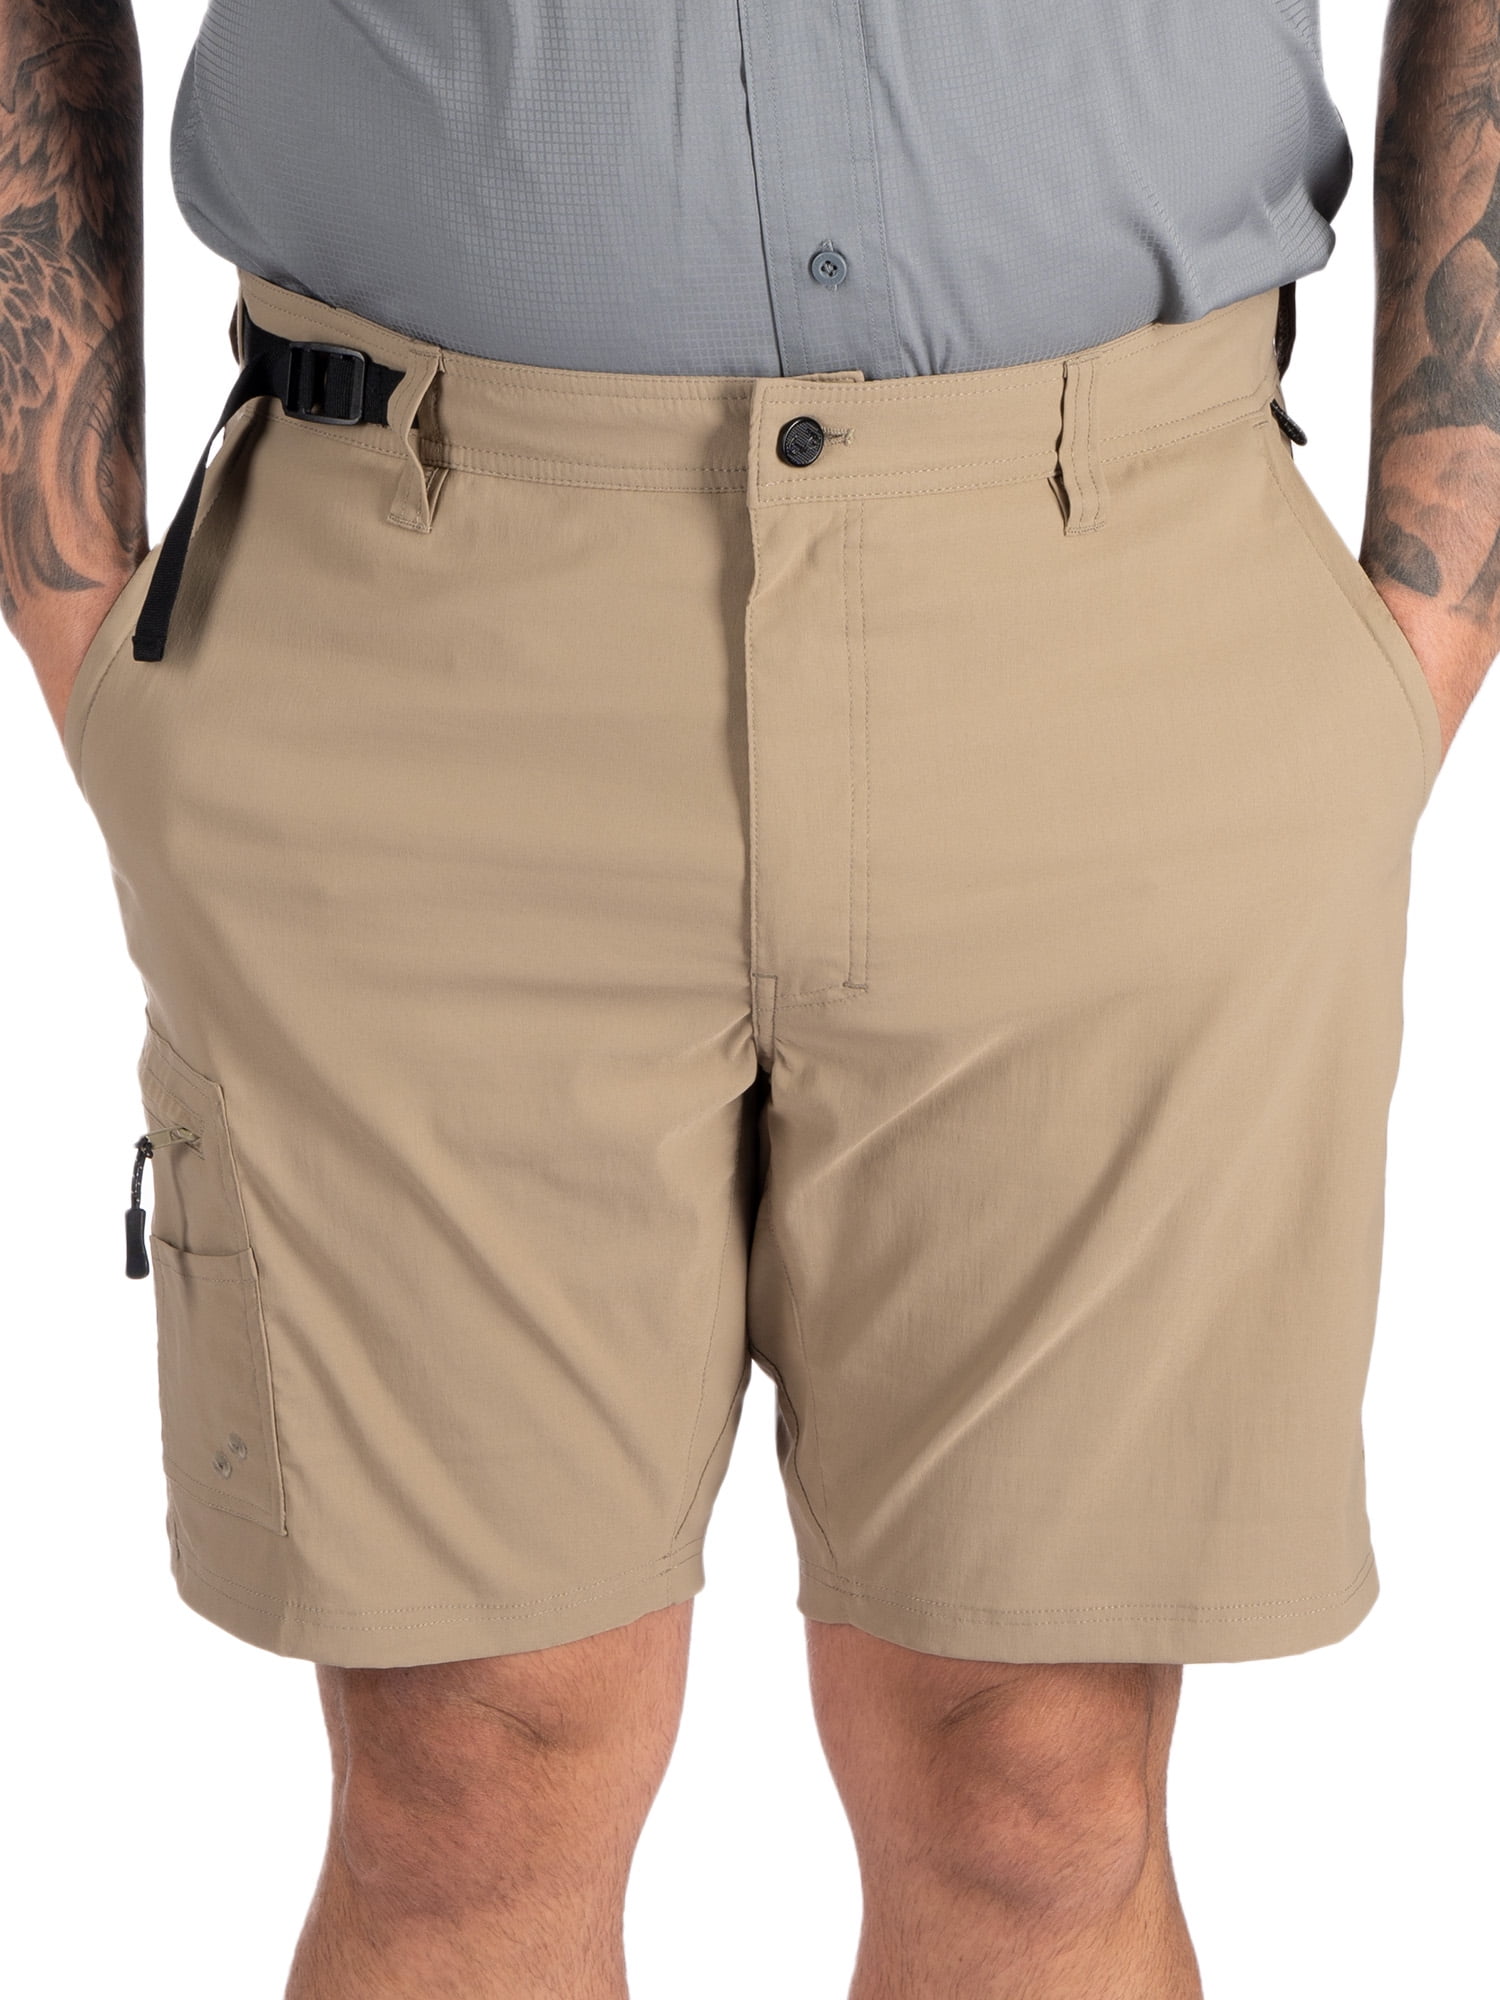 Realtree Men's Hybrid Fishing Shorts, Athletic Performance Short Pants in Stone Tan, Sizes S-3xl, Beige